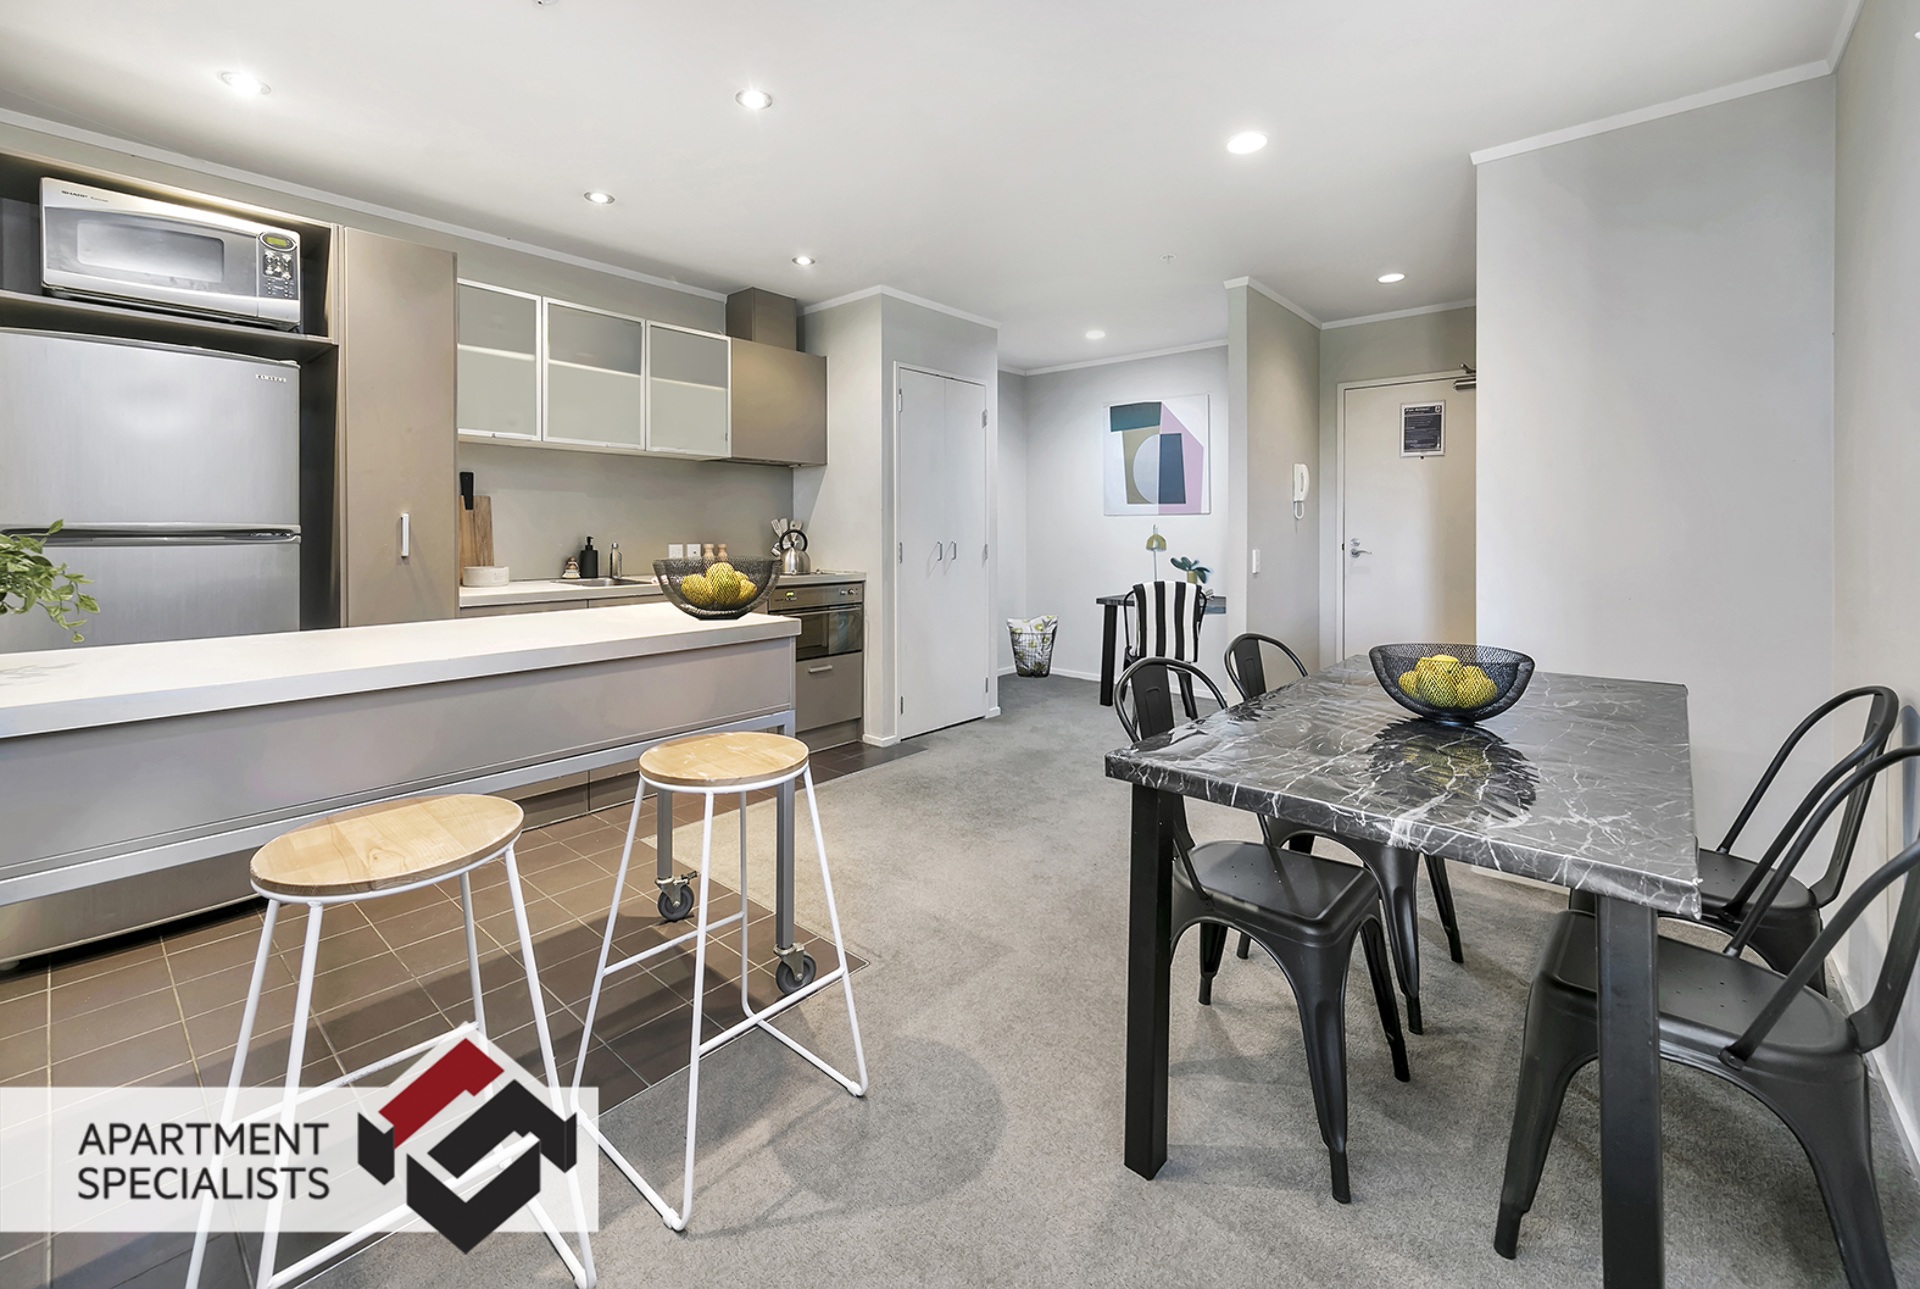 3 | 184 Symonds Street, Eden Terrace | Apartment Specialists